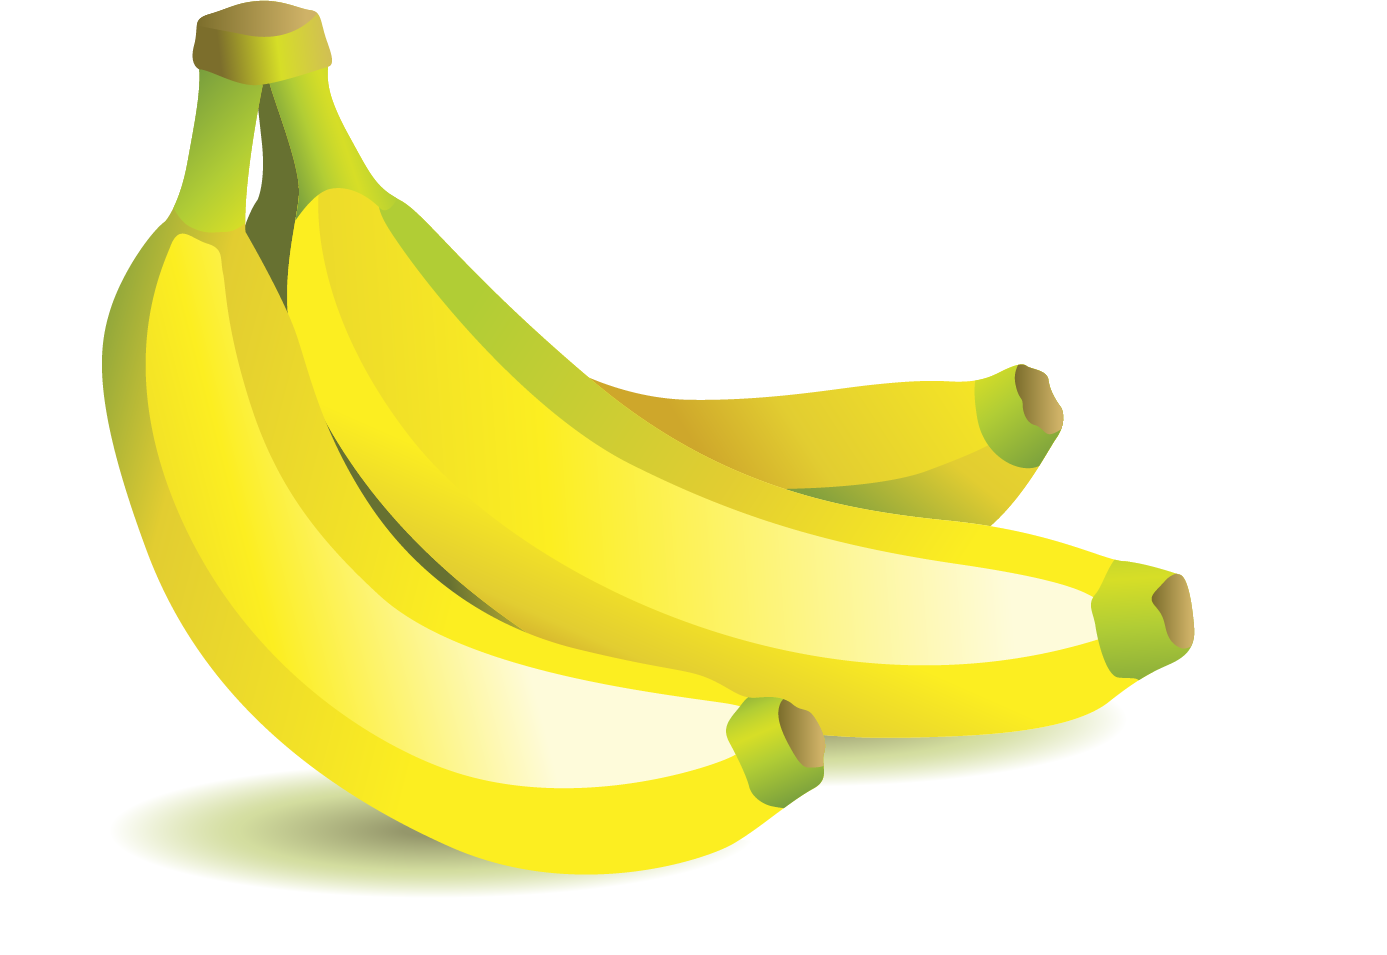 Clusterof Yellow Bananas Vector Illustration